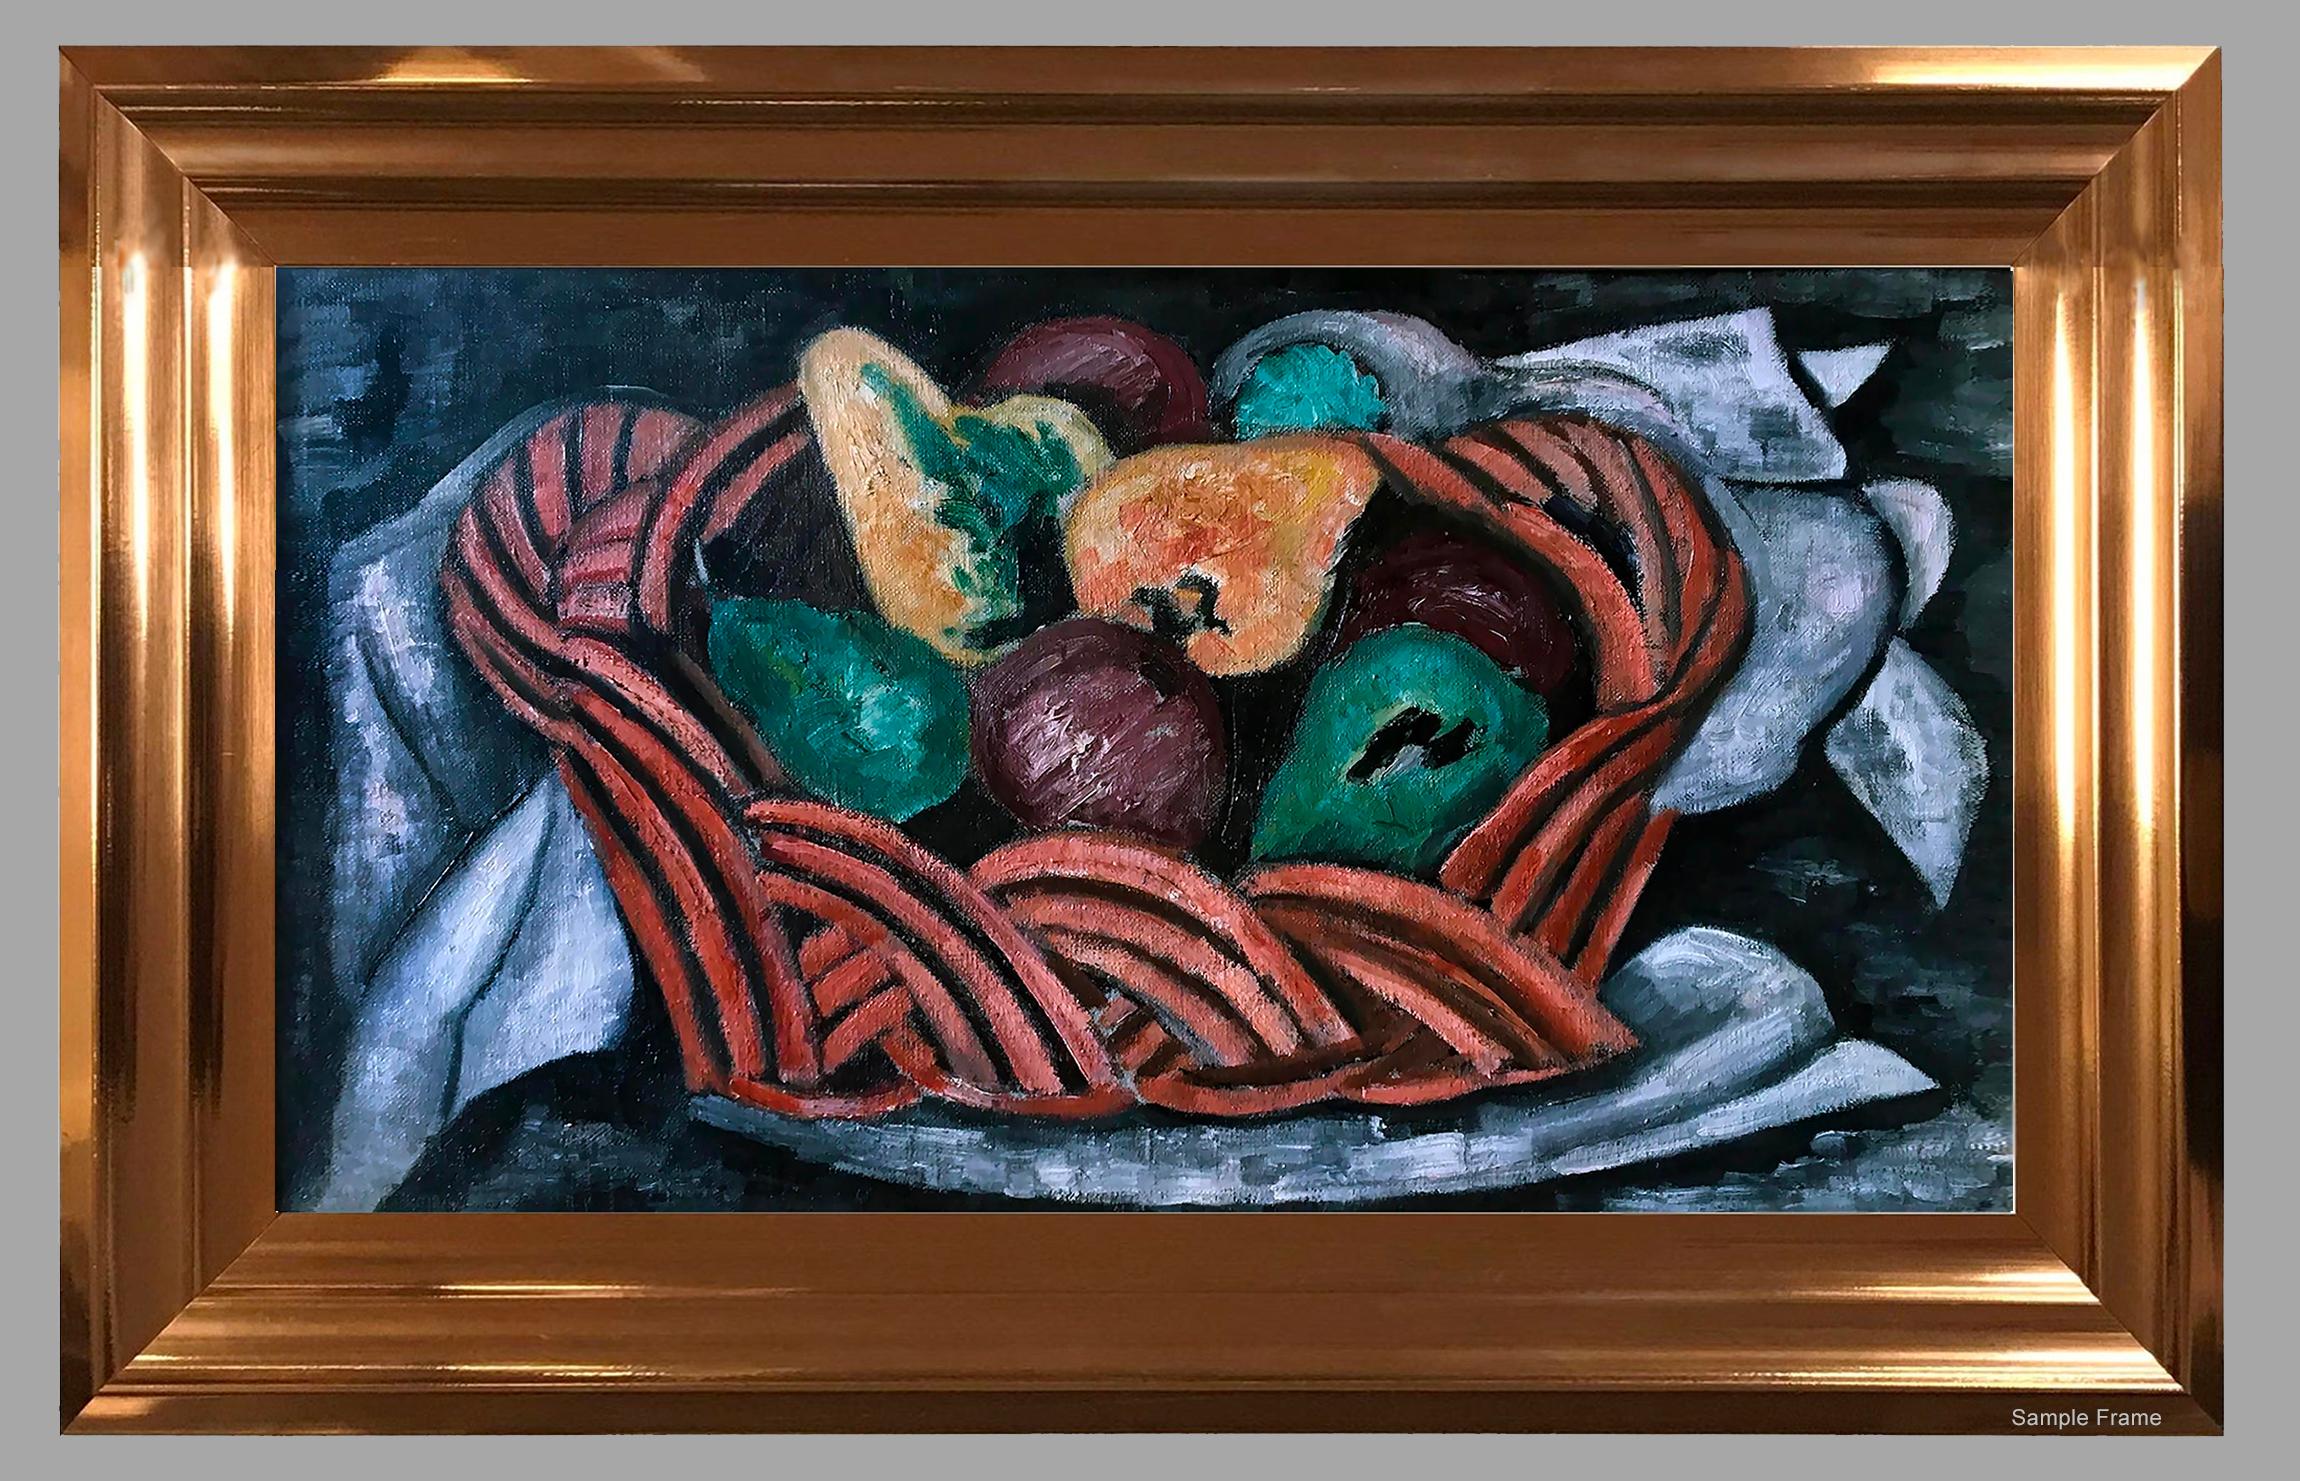 Panier avec fruits - Modernisme américain Painting par Marsden Hartley